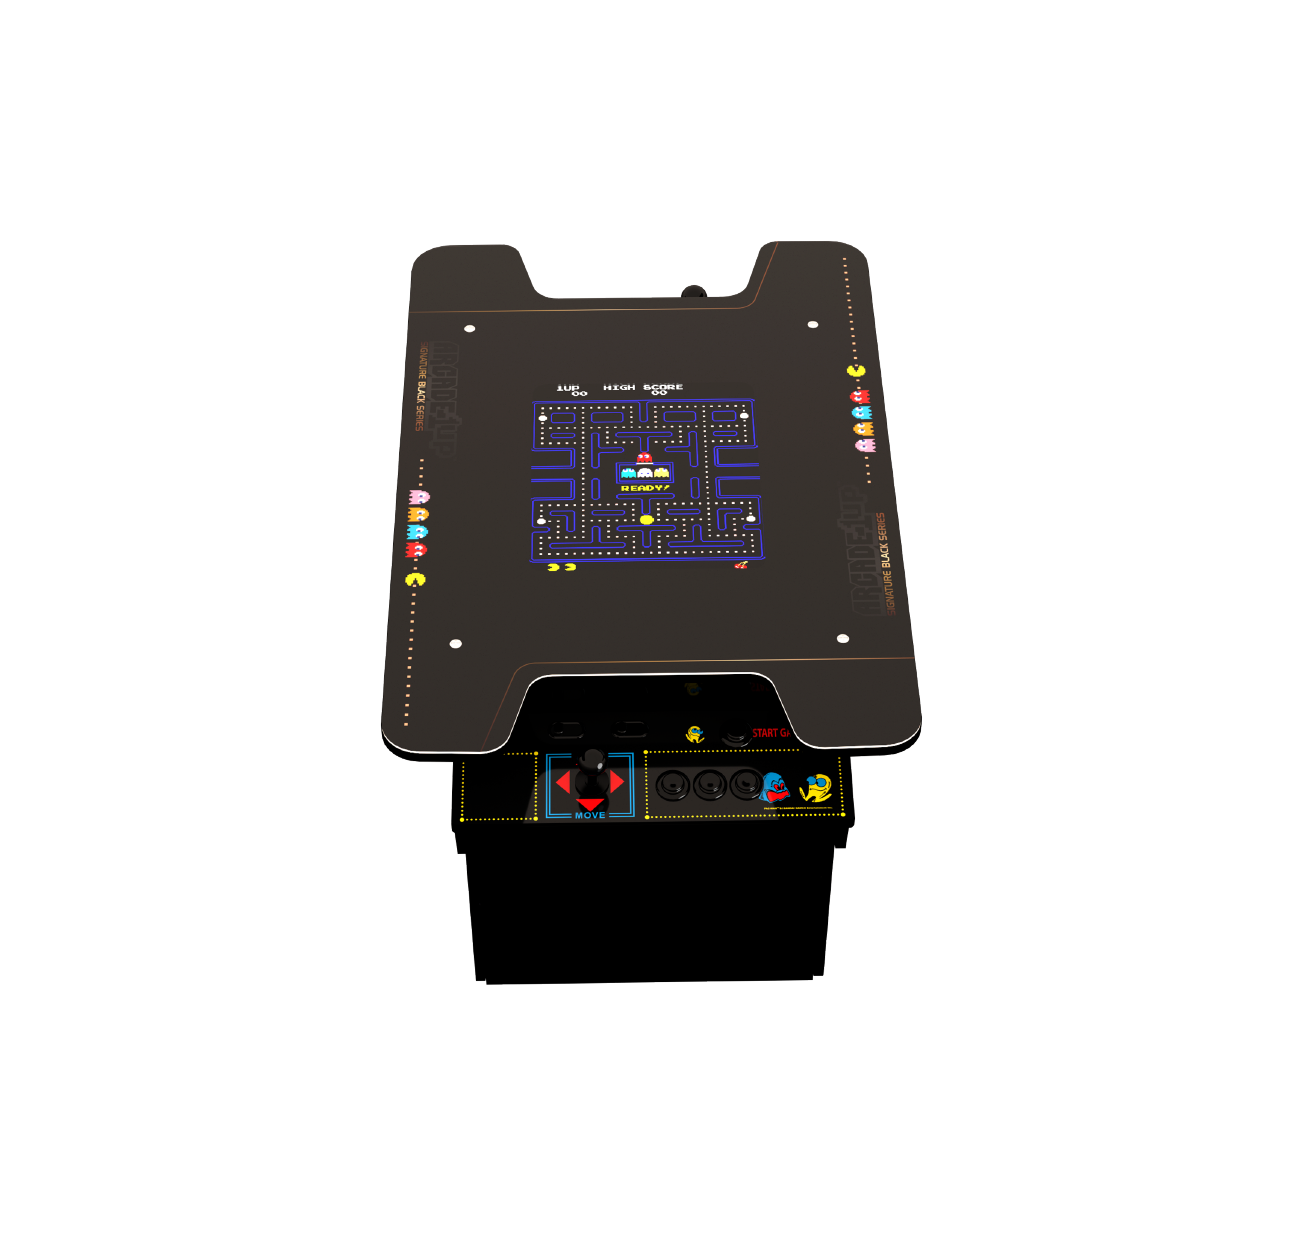 Pac-man tabletop arcade machine